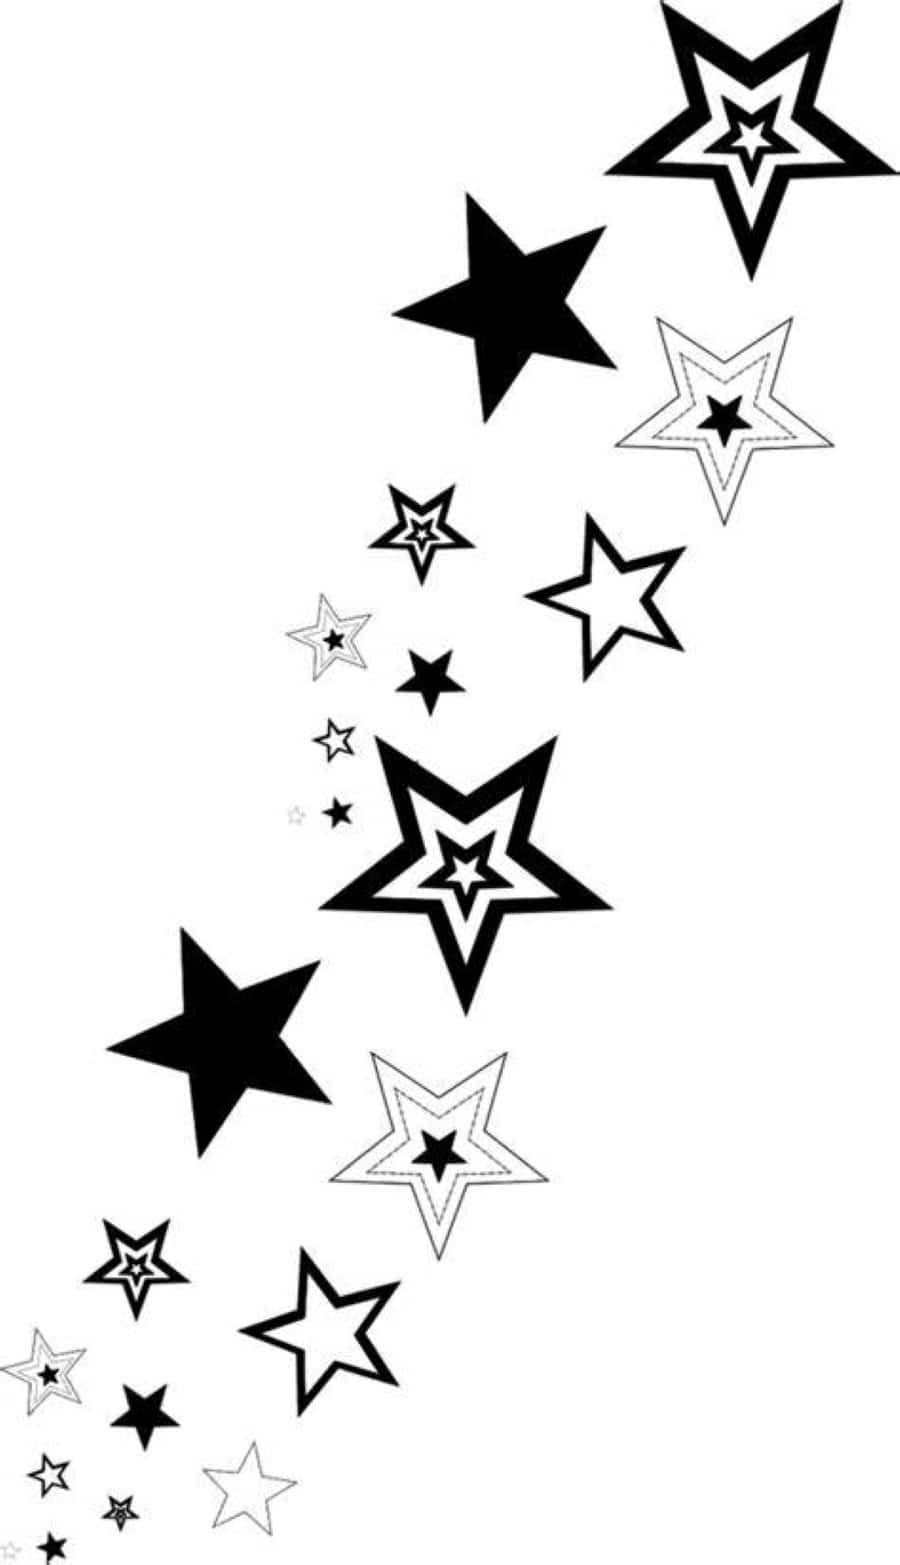 Mesmerizing Black and White Star Wallpaper